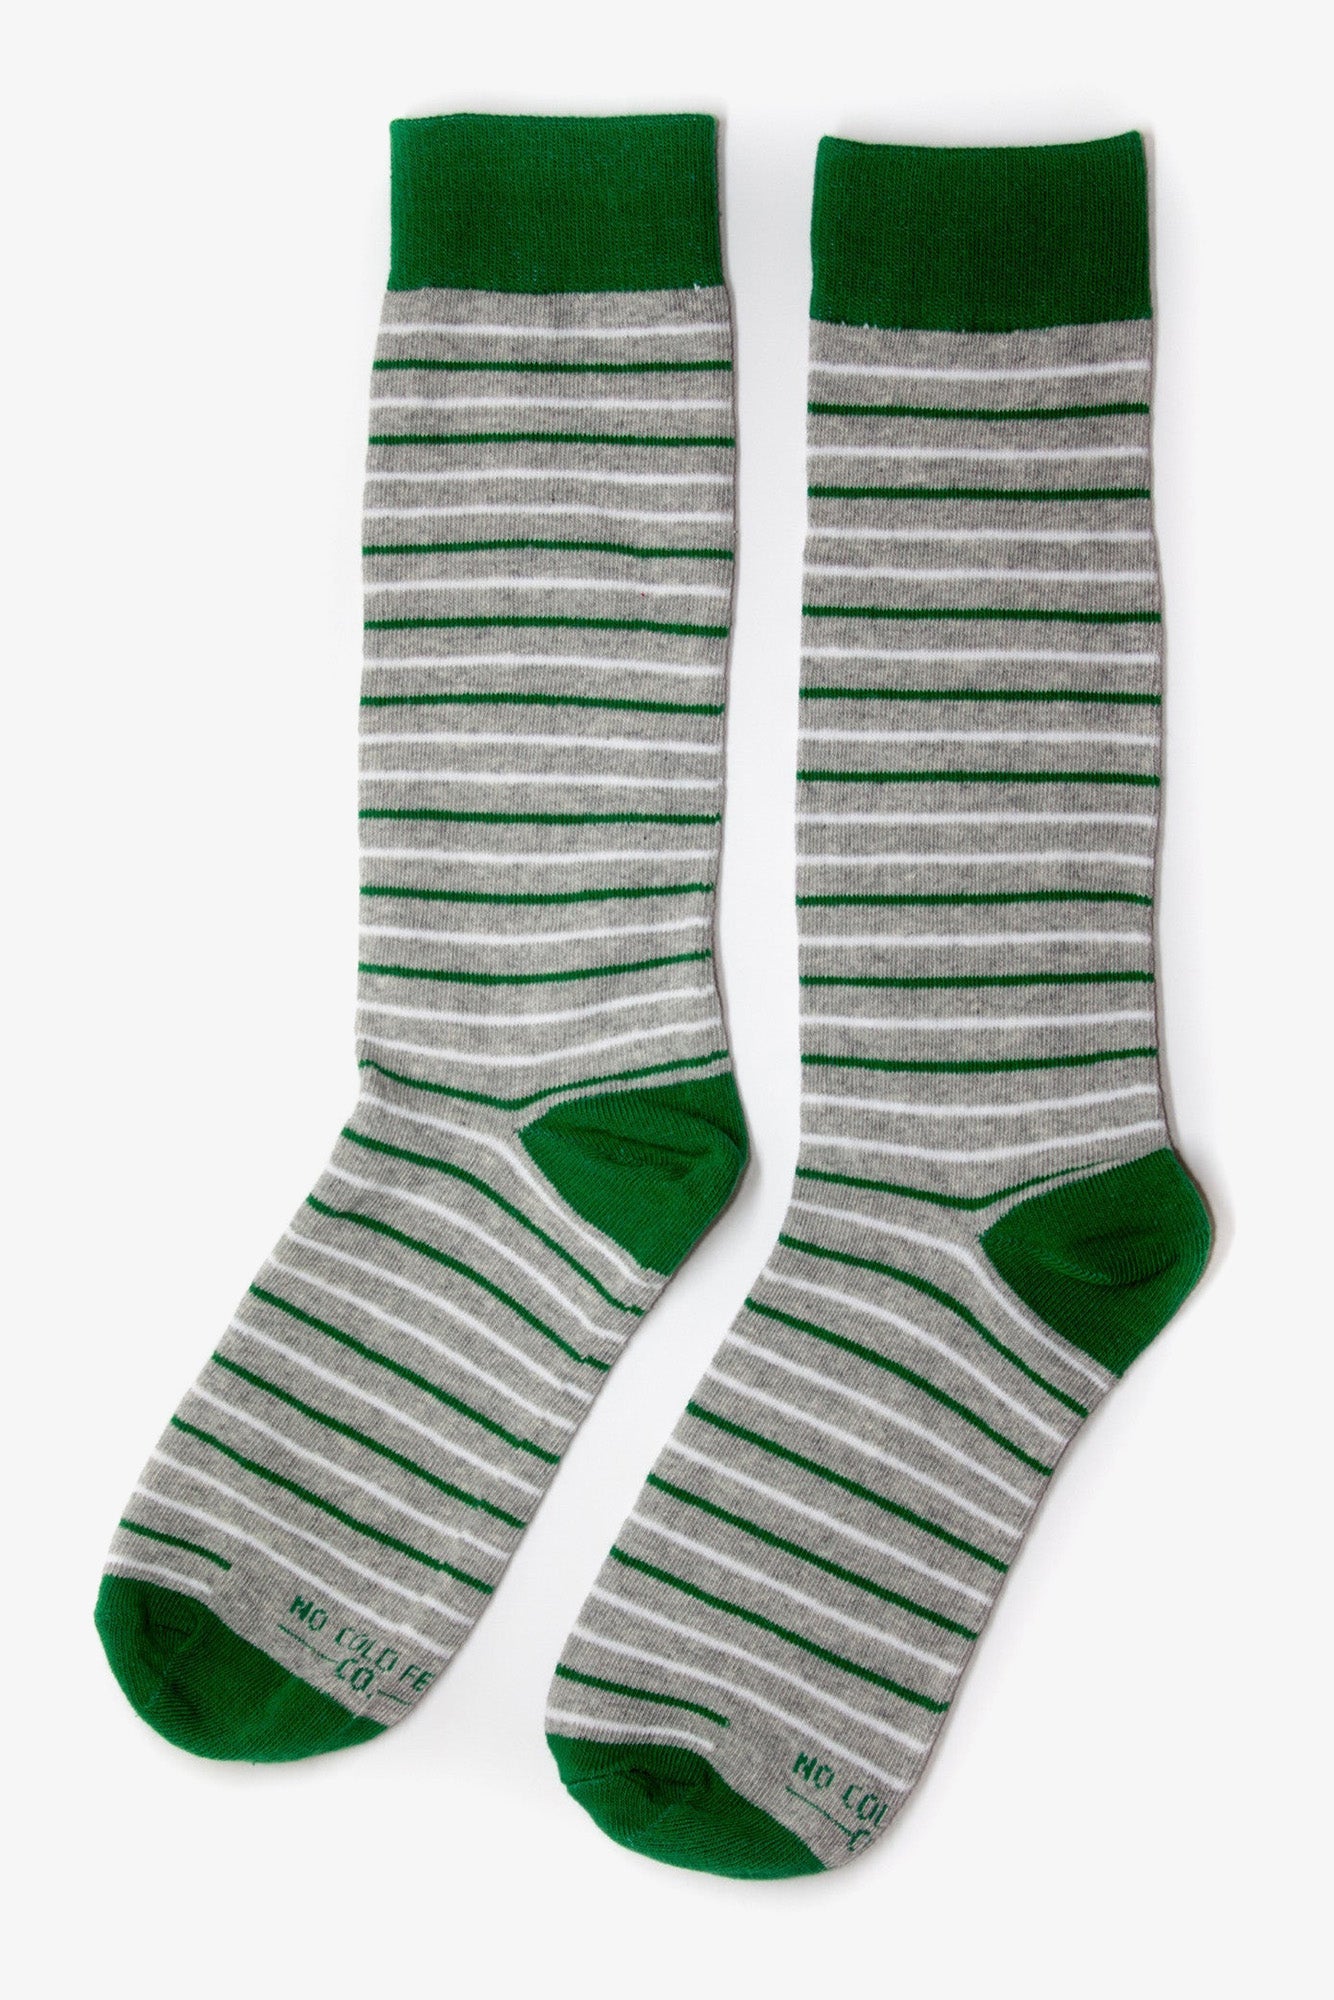 Green Striped Groomsmen Socks by No Cold Feet